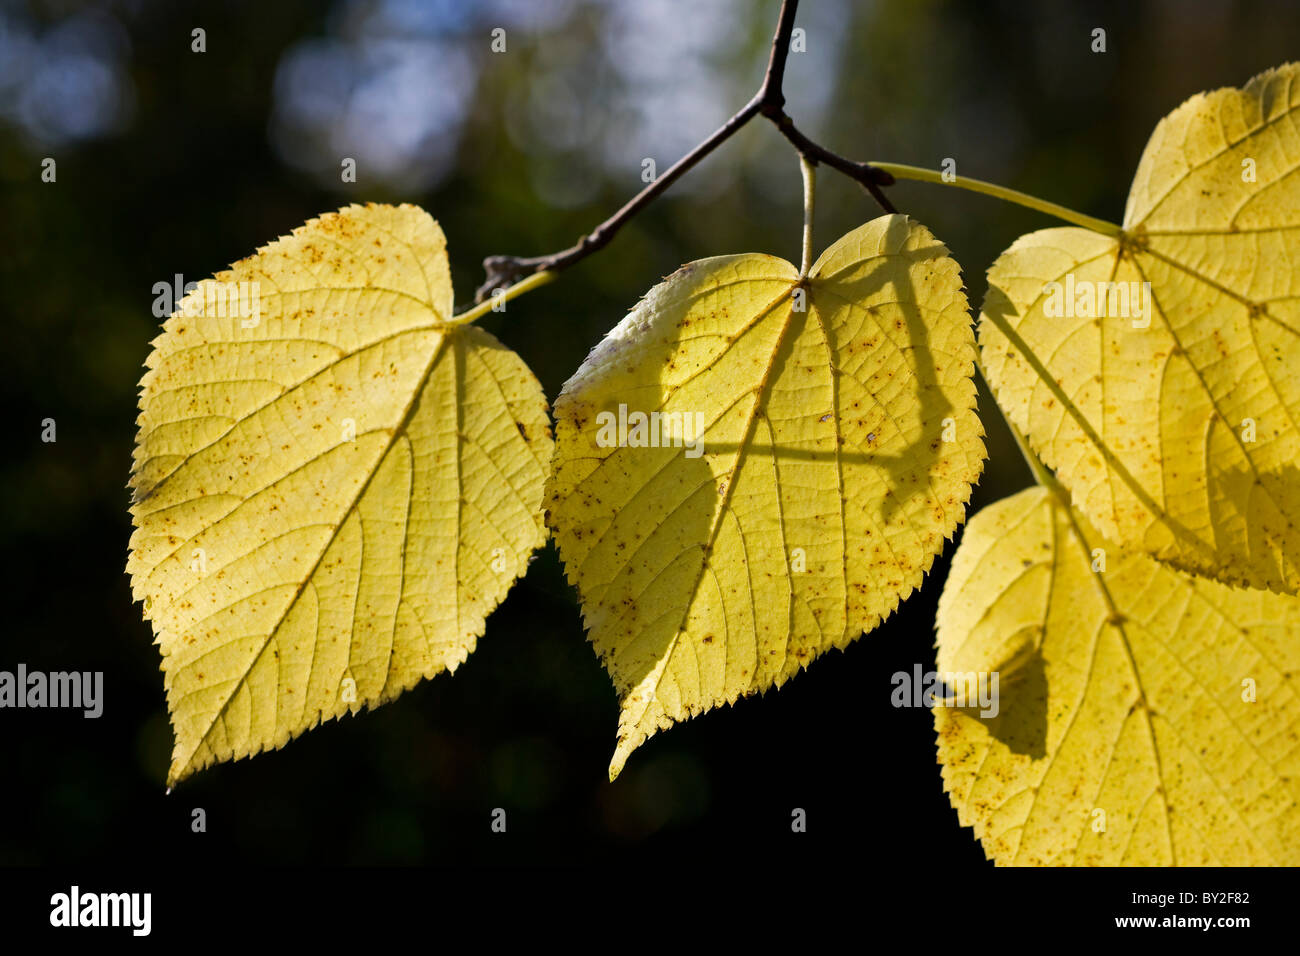 Leaves of lime / linden / basswood tree (Tilia) in autumn, Belgium Stock Photo